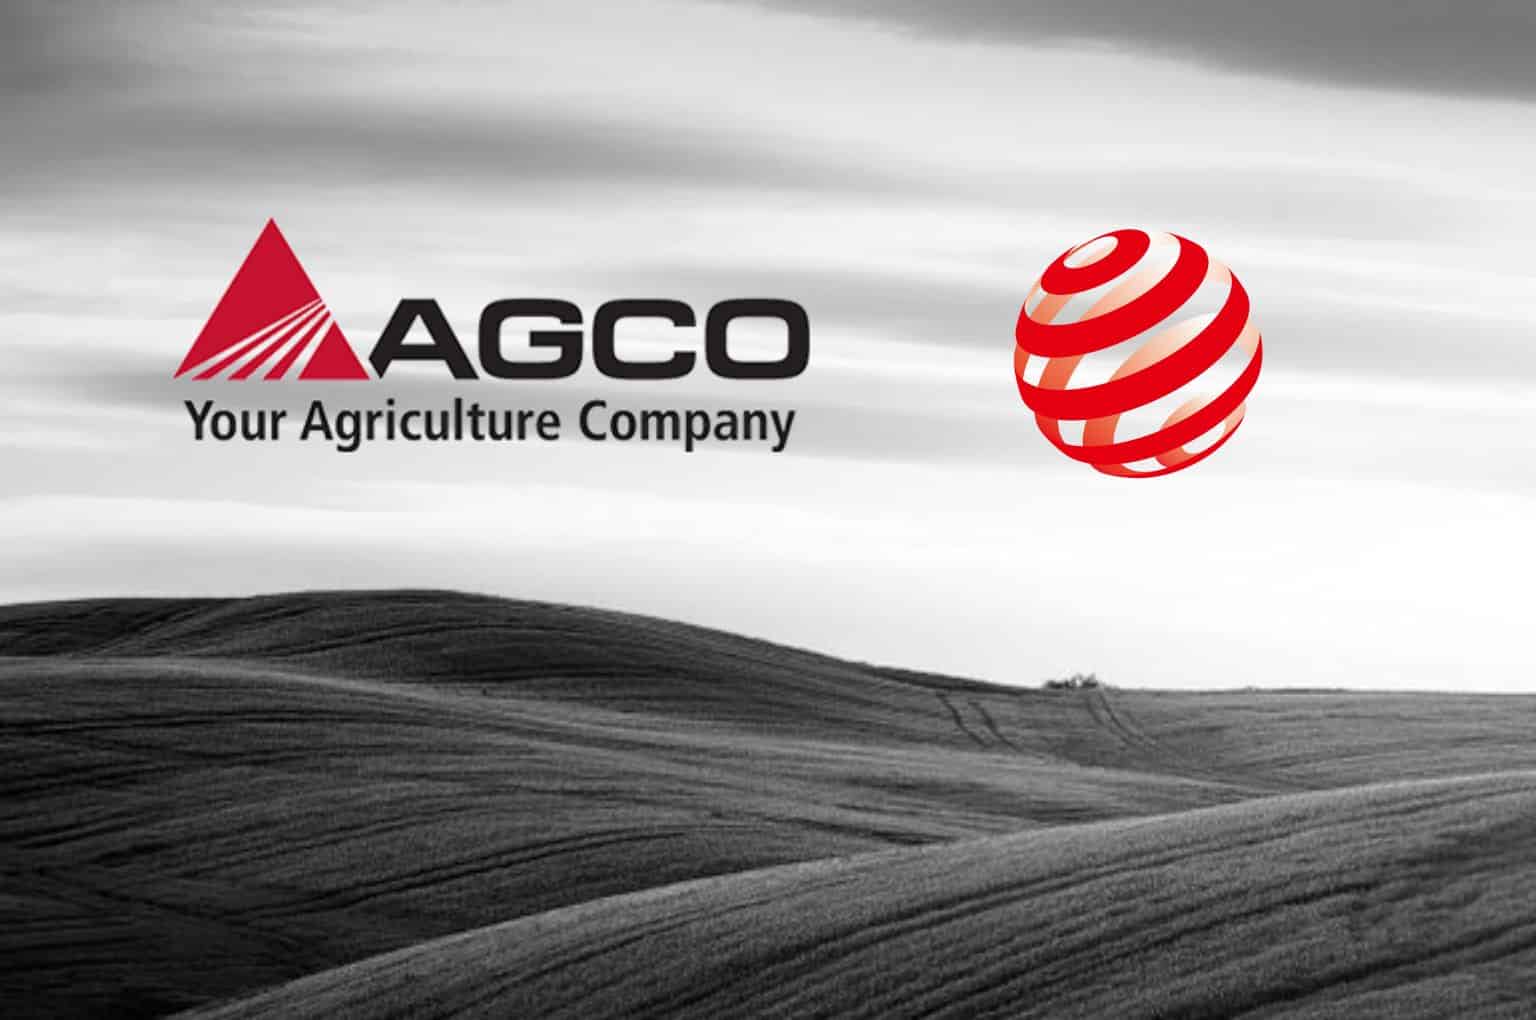 AGCO Red Dot design concept award